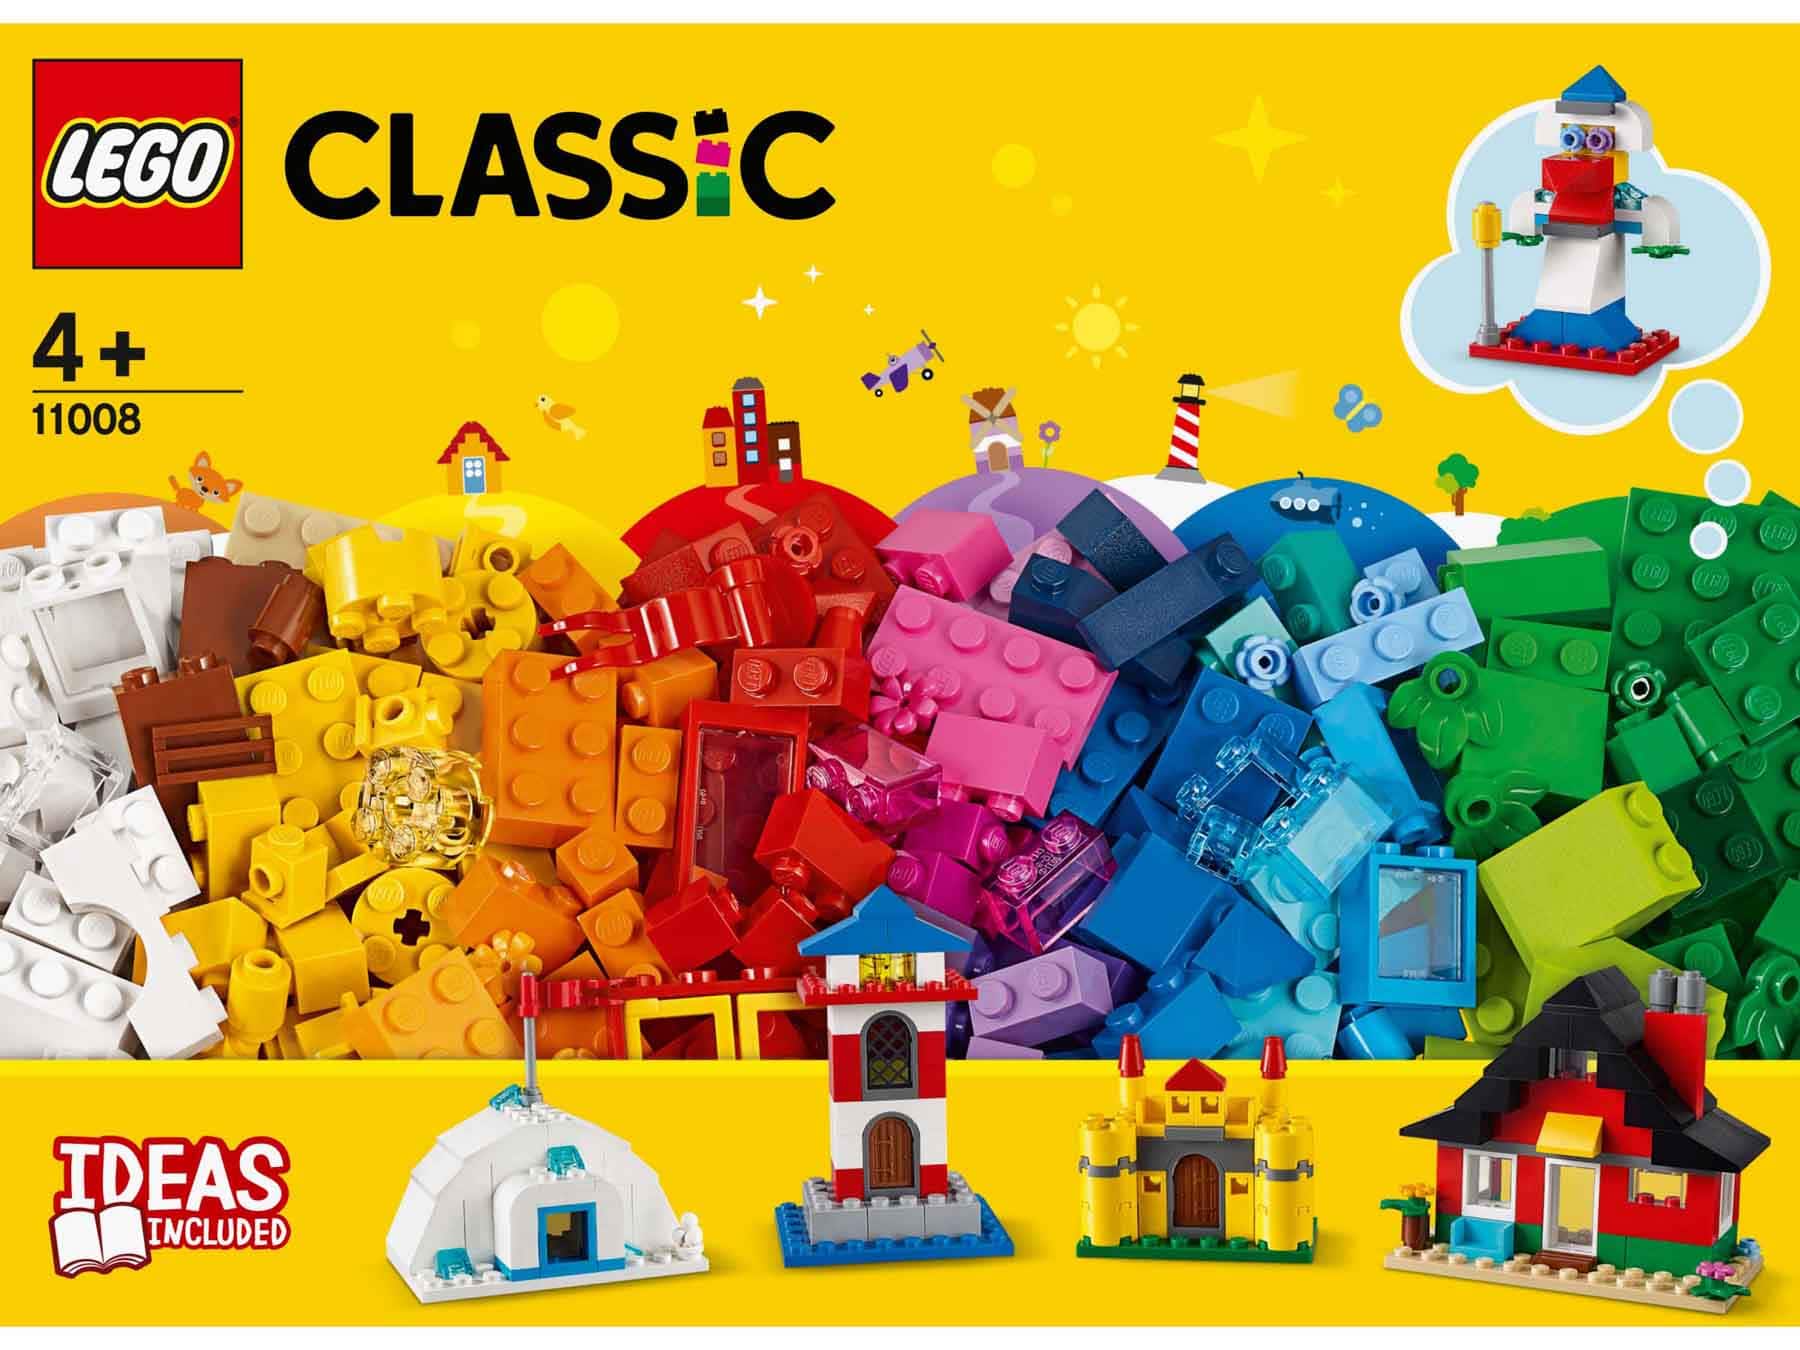 LEGO BRICKS AND HOUSES LEGO CLASSIC